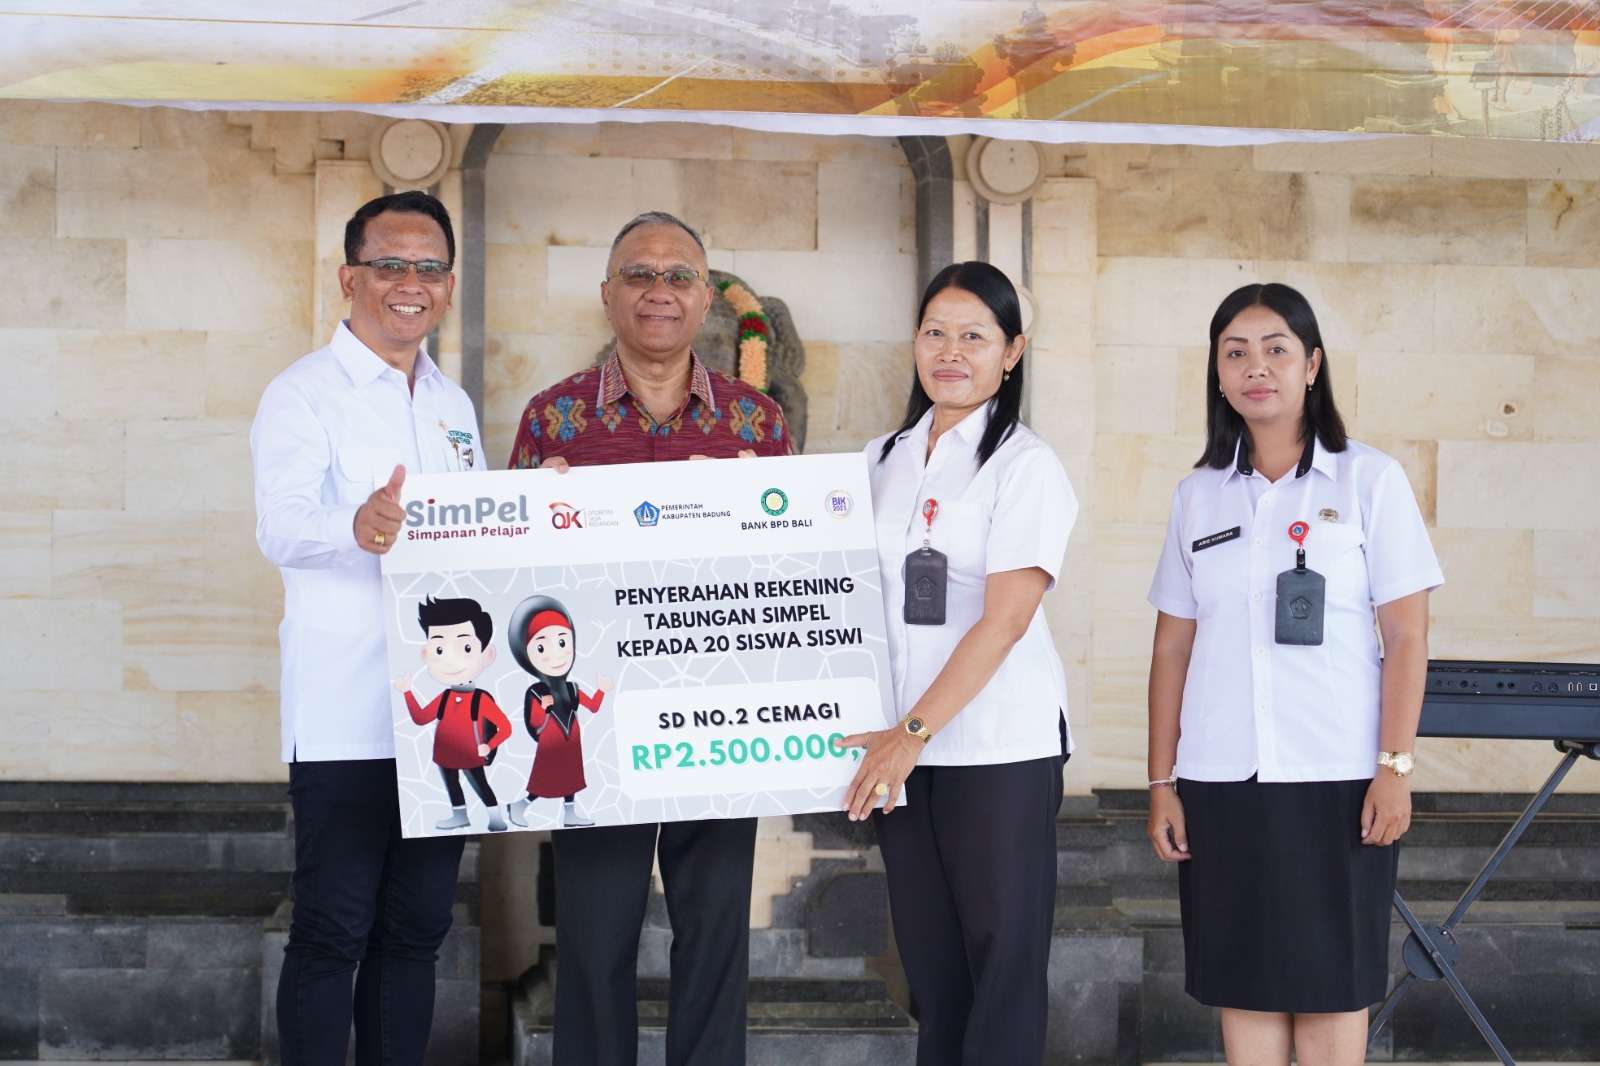 OJK Bali Nusa Tenggara Terus Tingkatkan Penggunaan Produk Sektor Jasa Keuangan bagi Pelaku UMKM dan Pelajar